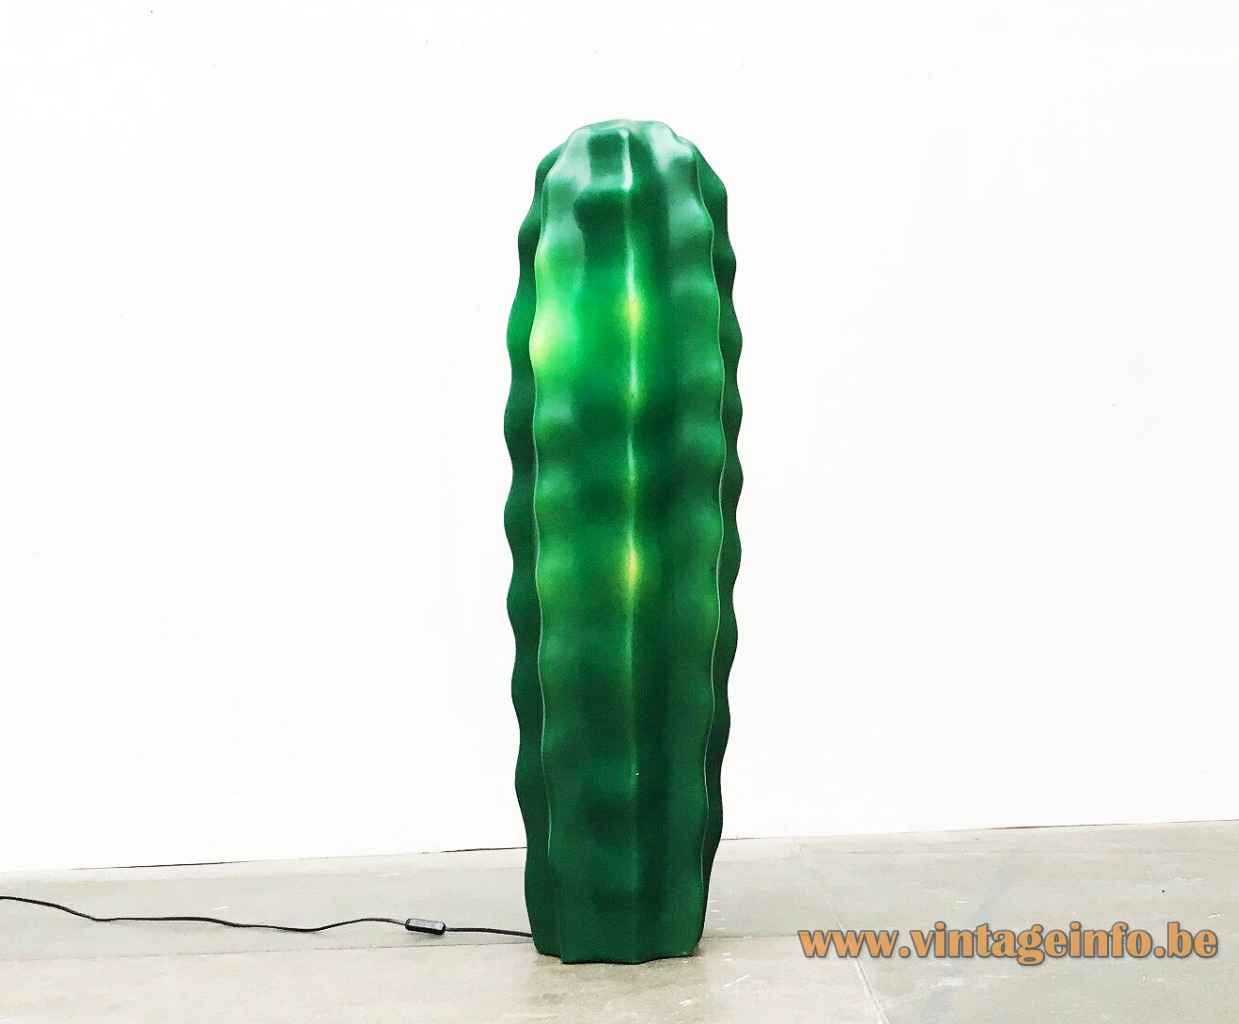 Flötotto Sucu cactus floor lamp elongated green plastic lampshades 1990s design: Art Nowo Germany E14 sockets